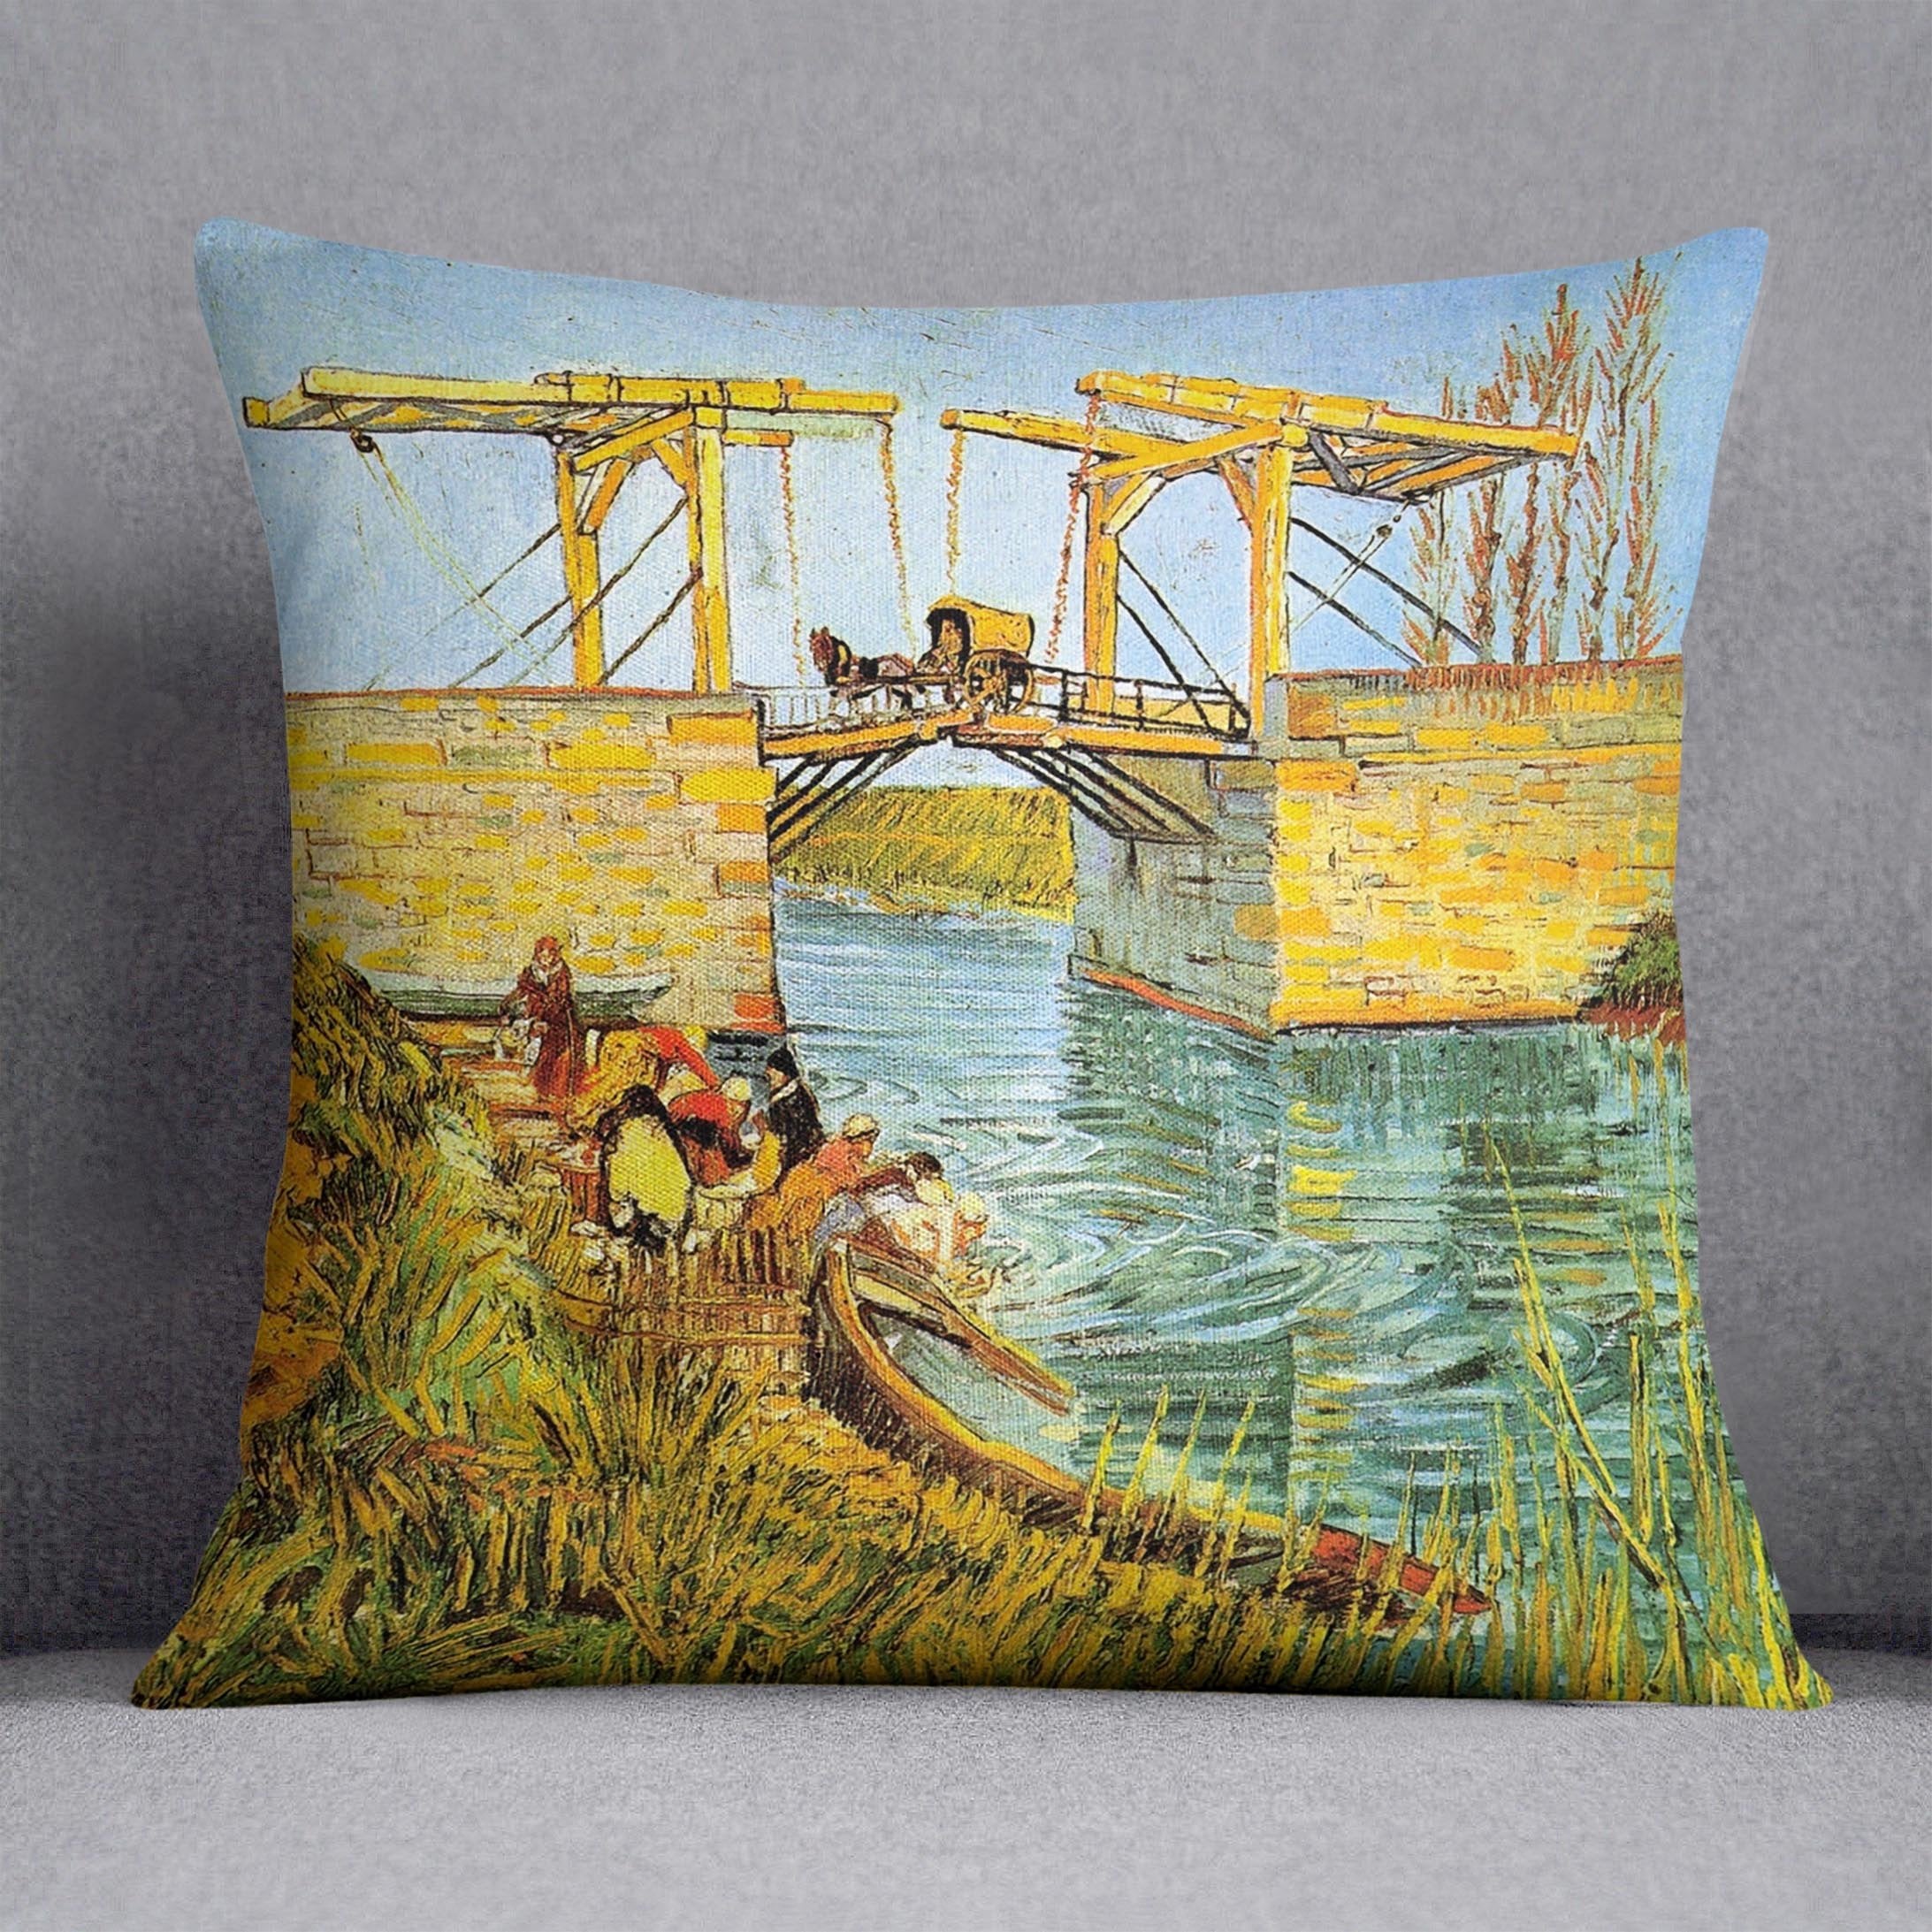 The Langlois Bridge at Arles by Van Gogh Throw Pillow